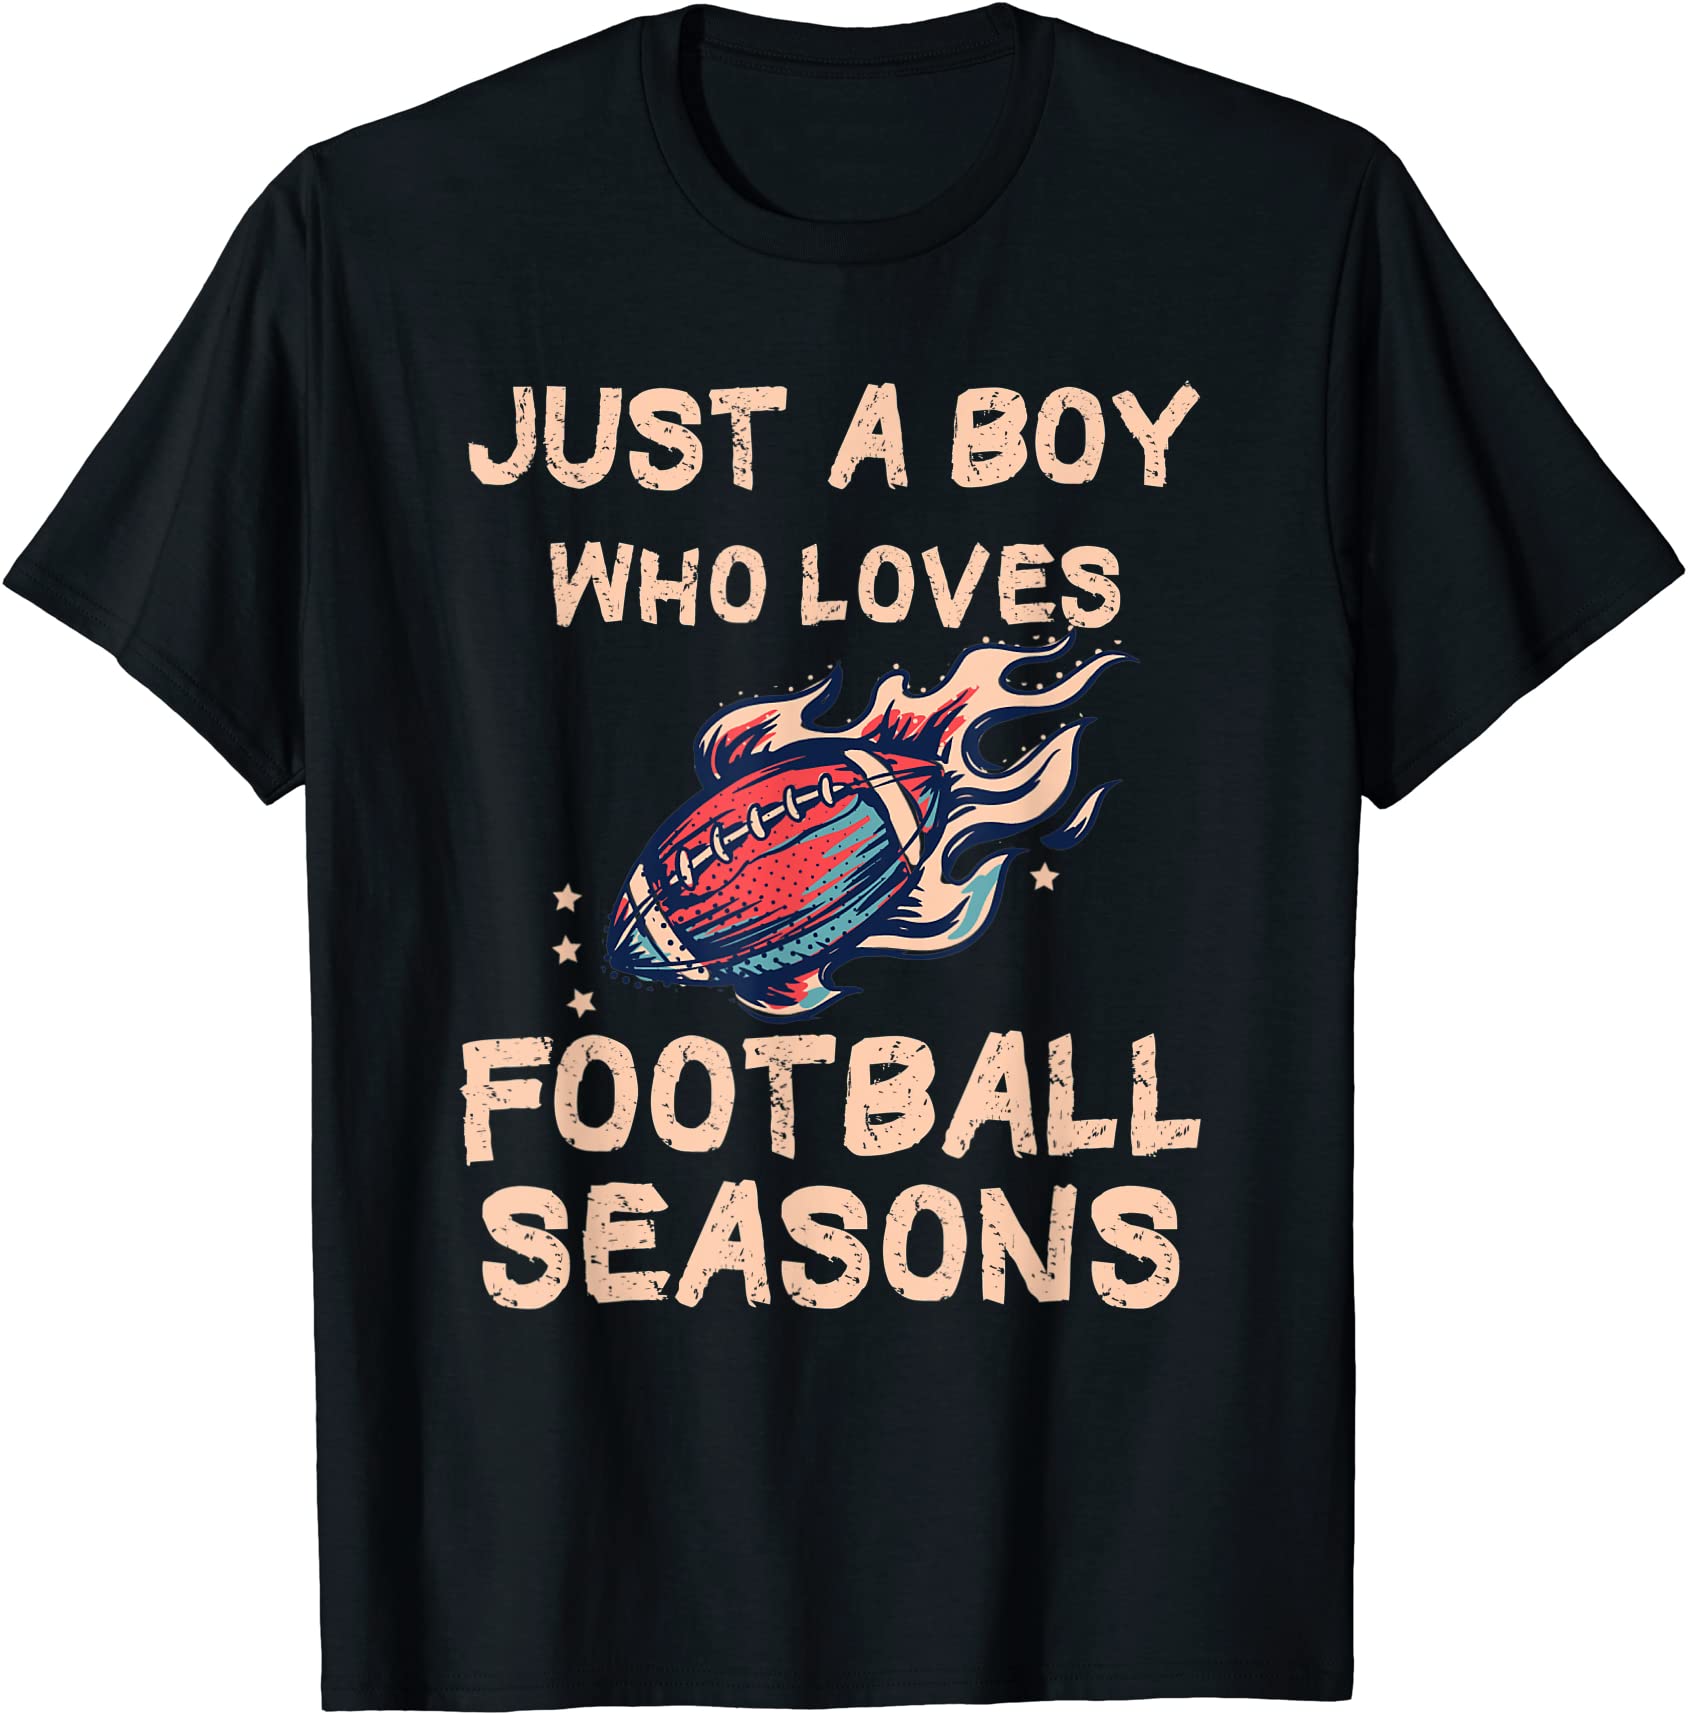 just a boy who loves football seasons t shirt men - Buy t-shirt designs